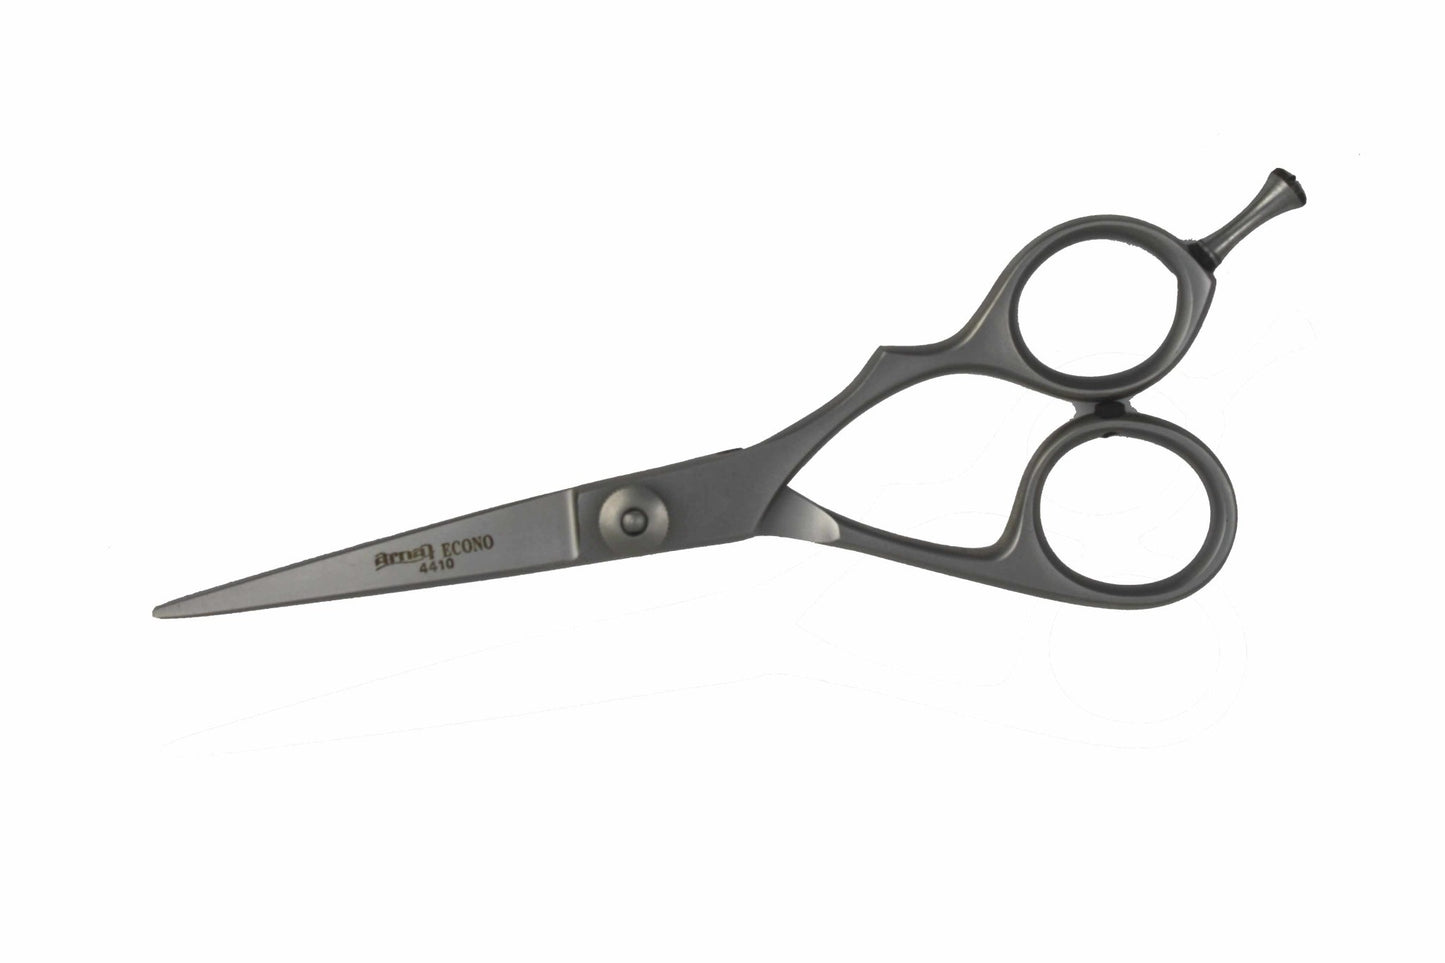 Arnaf Econo Scissors 5.5" Model 4410.55